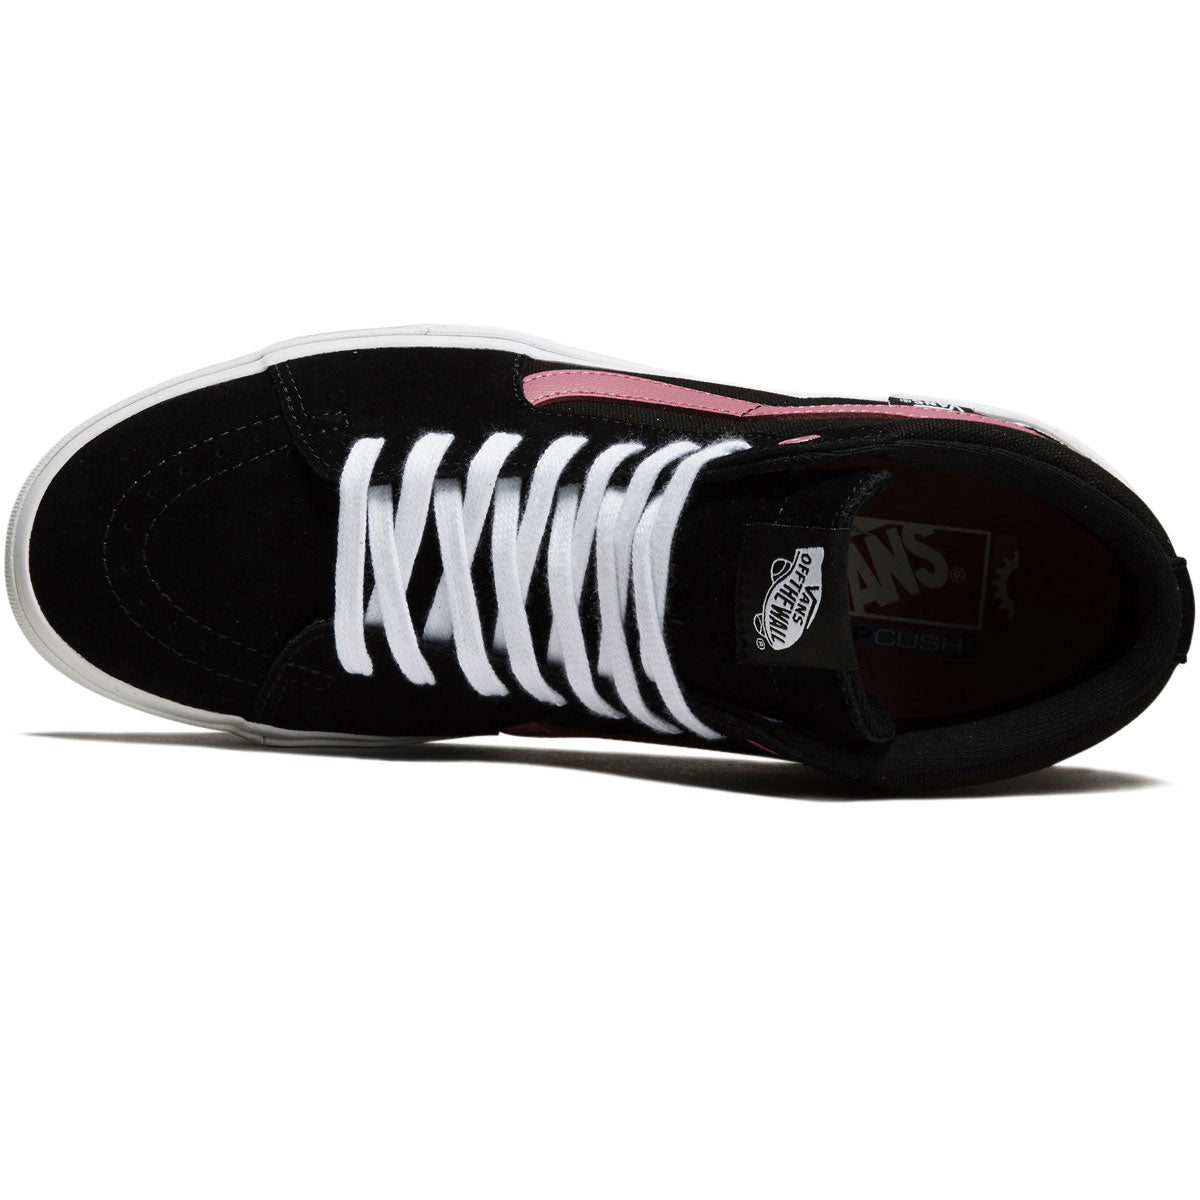 Vans Bmx Sk8-hi Shoes - Black/Magenta image 3